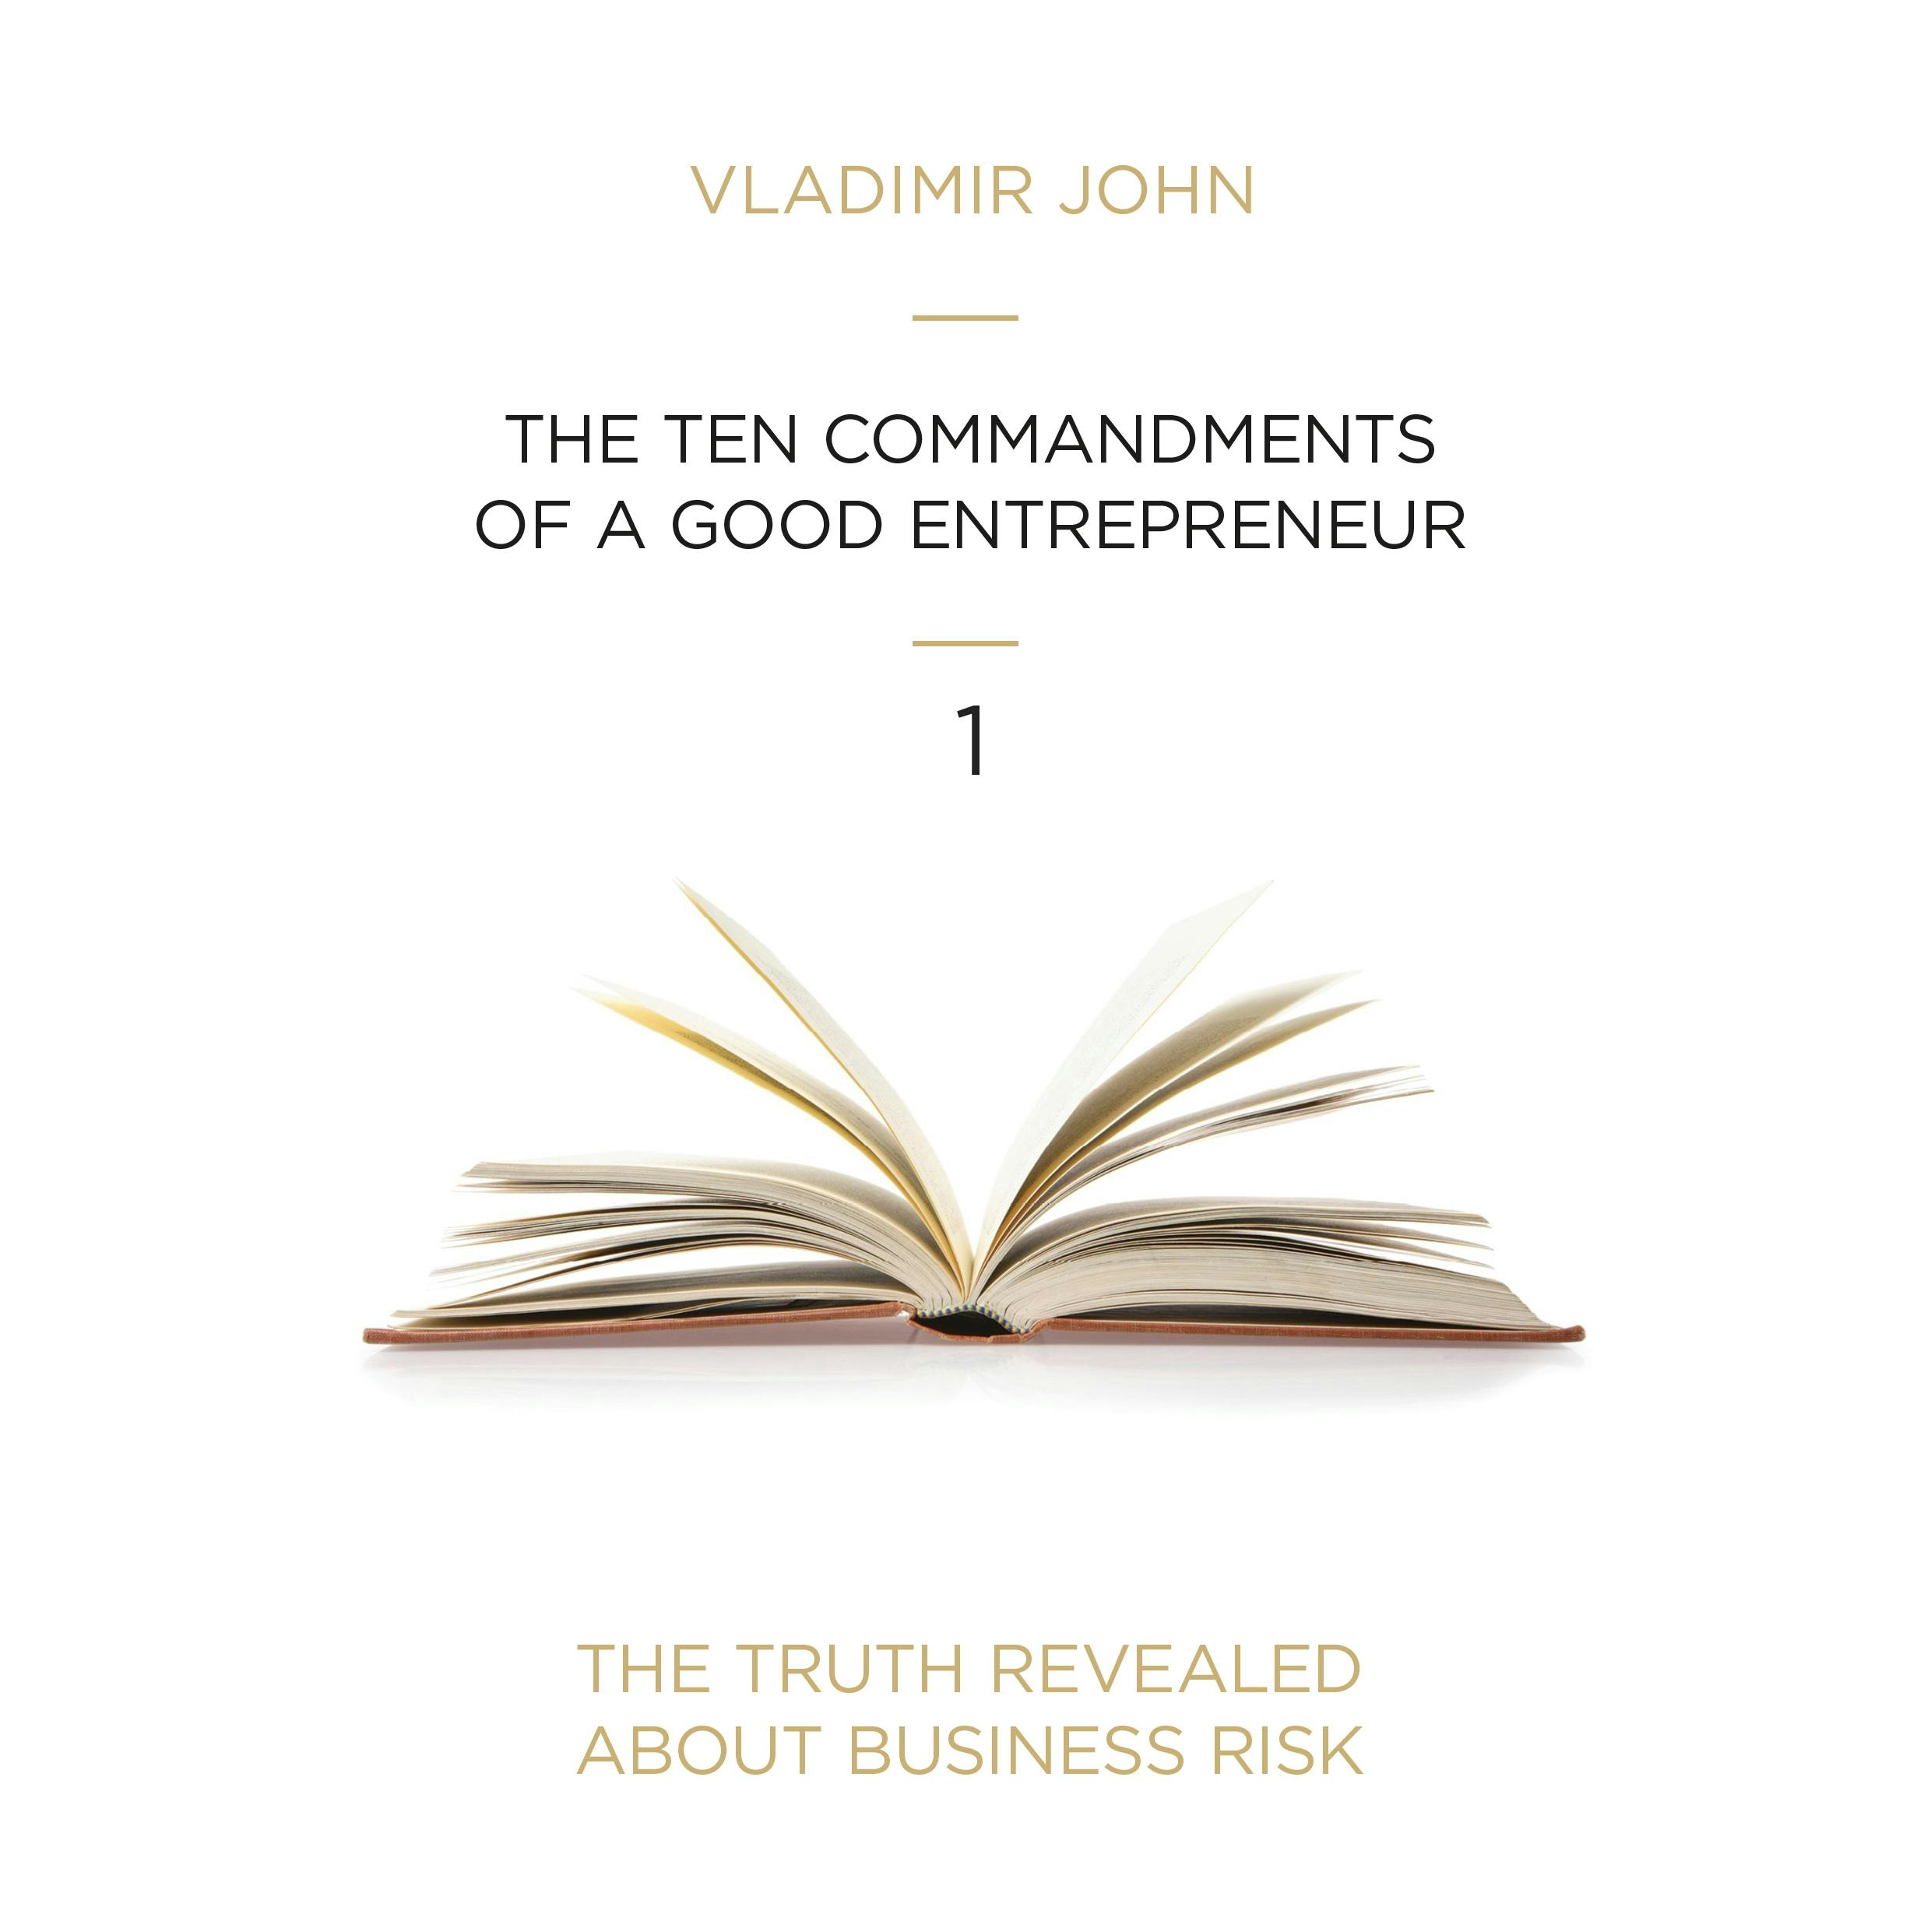 The Ten Commandments of a Good Entrepreneur - Vladimir John